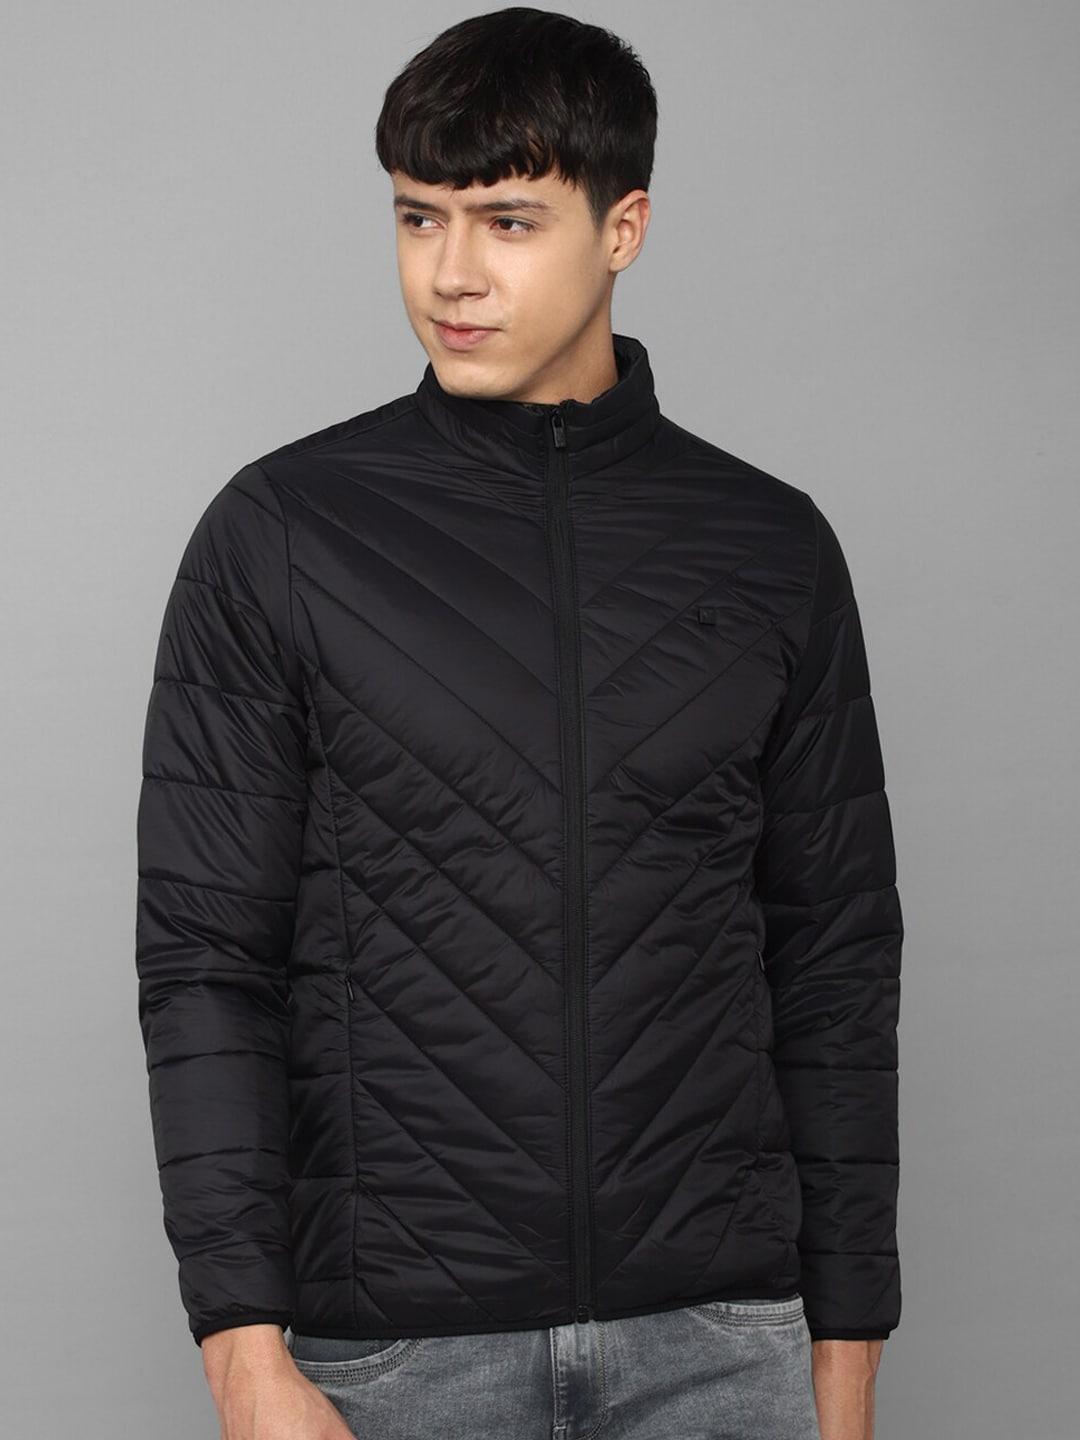 allen-solly-men-black-cotton-quilted-jacket